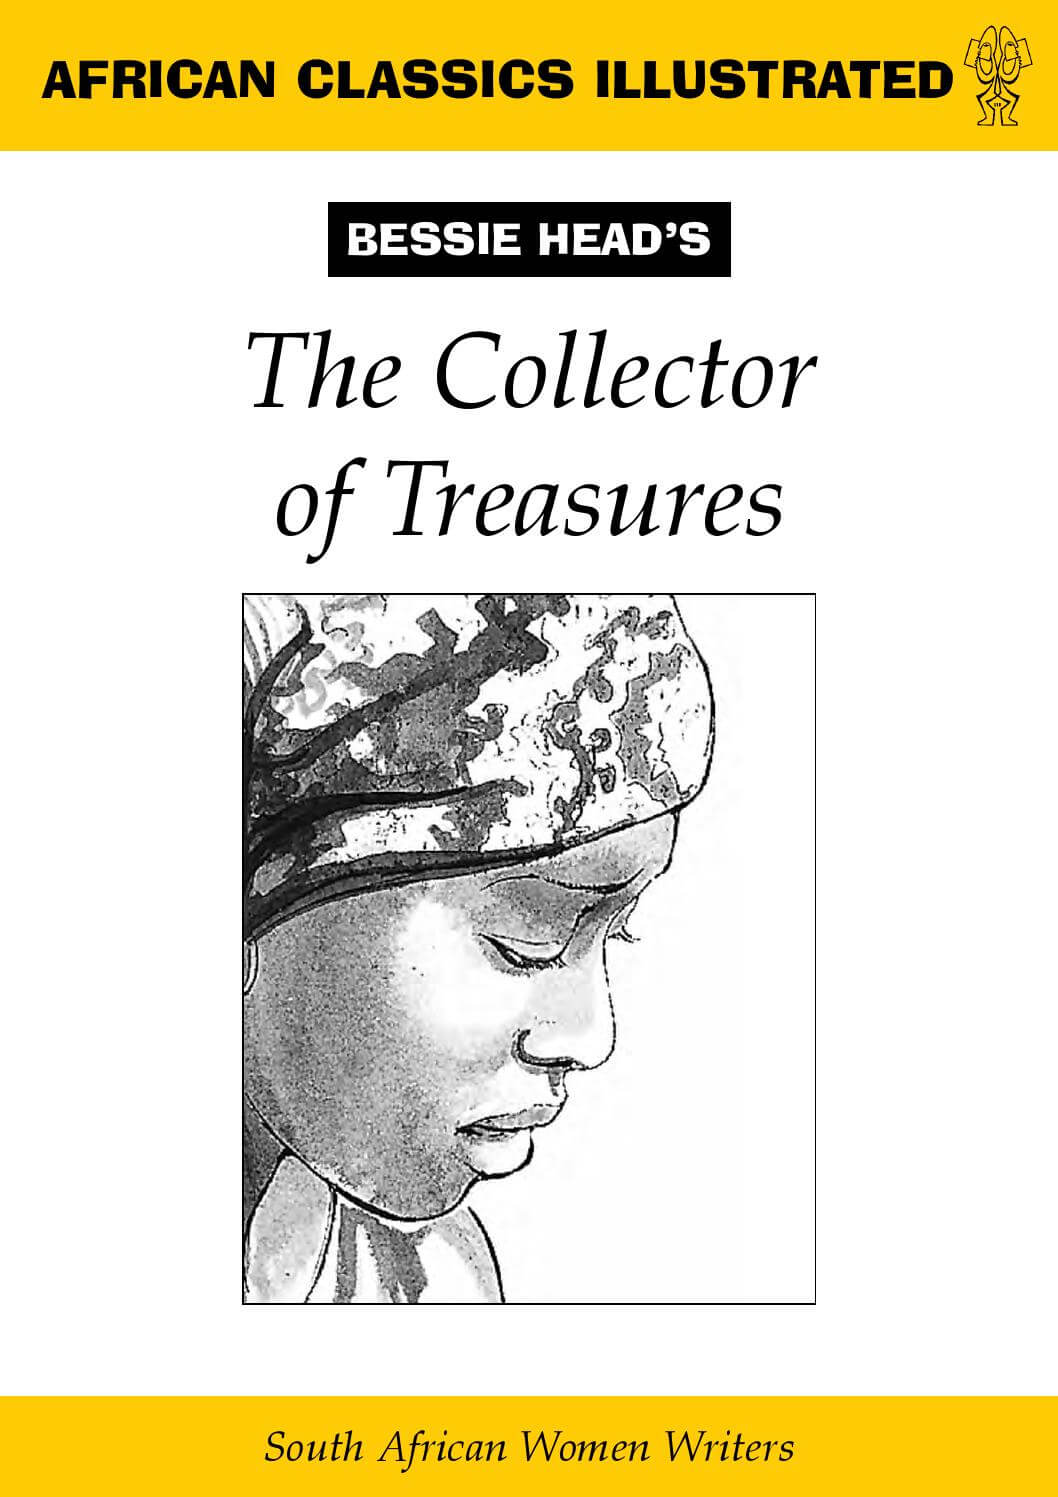 The Collector of Treasure Summary